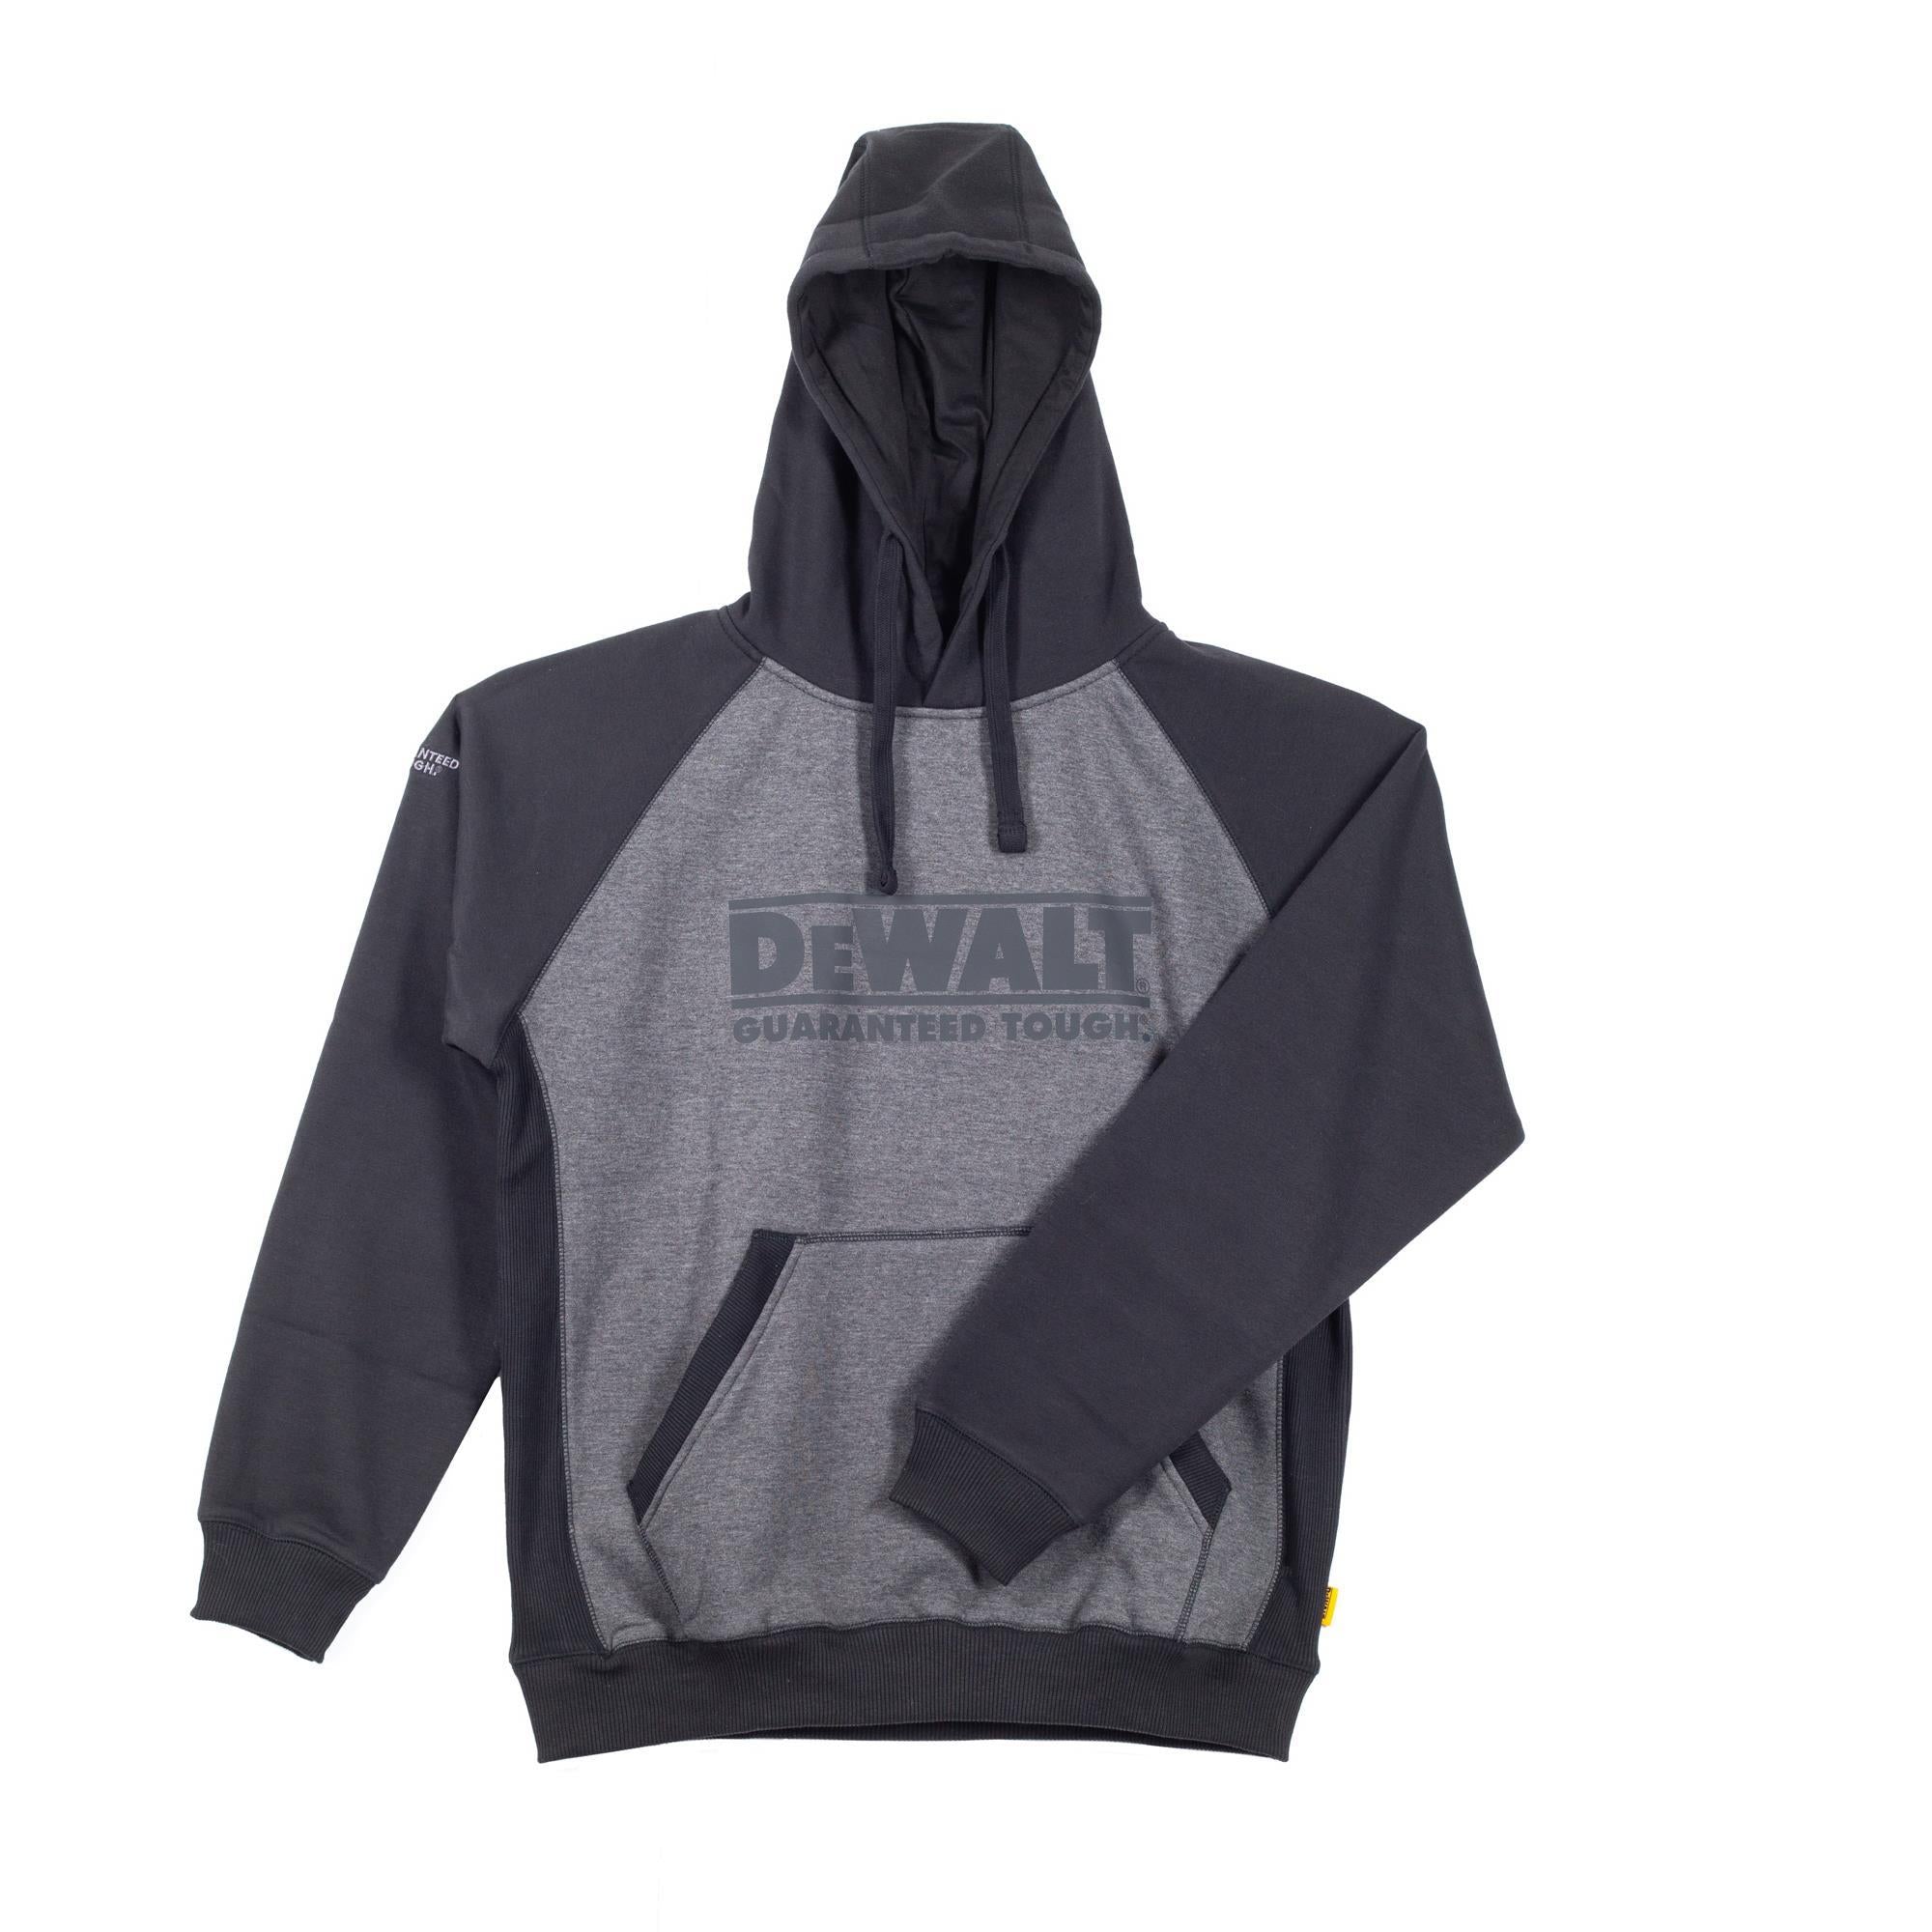 DeWalt Stratford grey/black polycotton hooded hoodie sweatshirt jumper